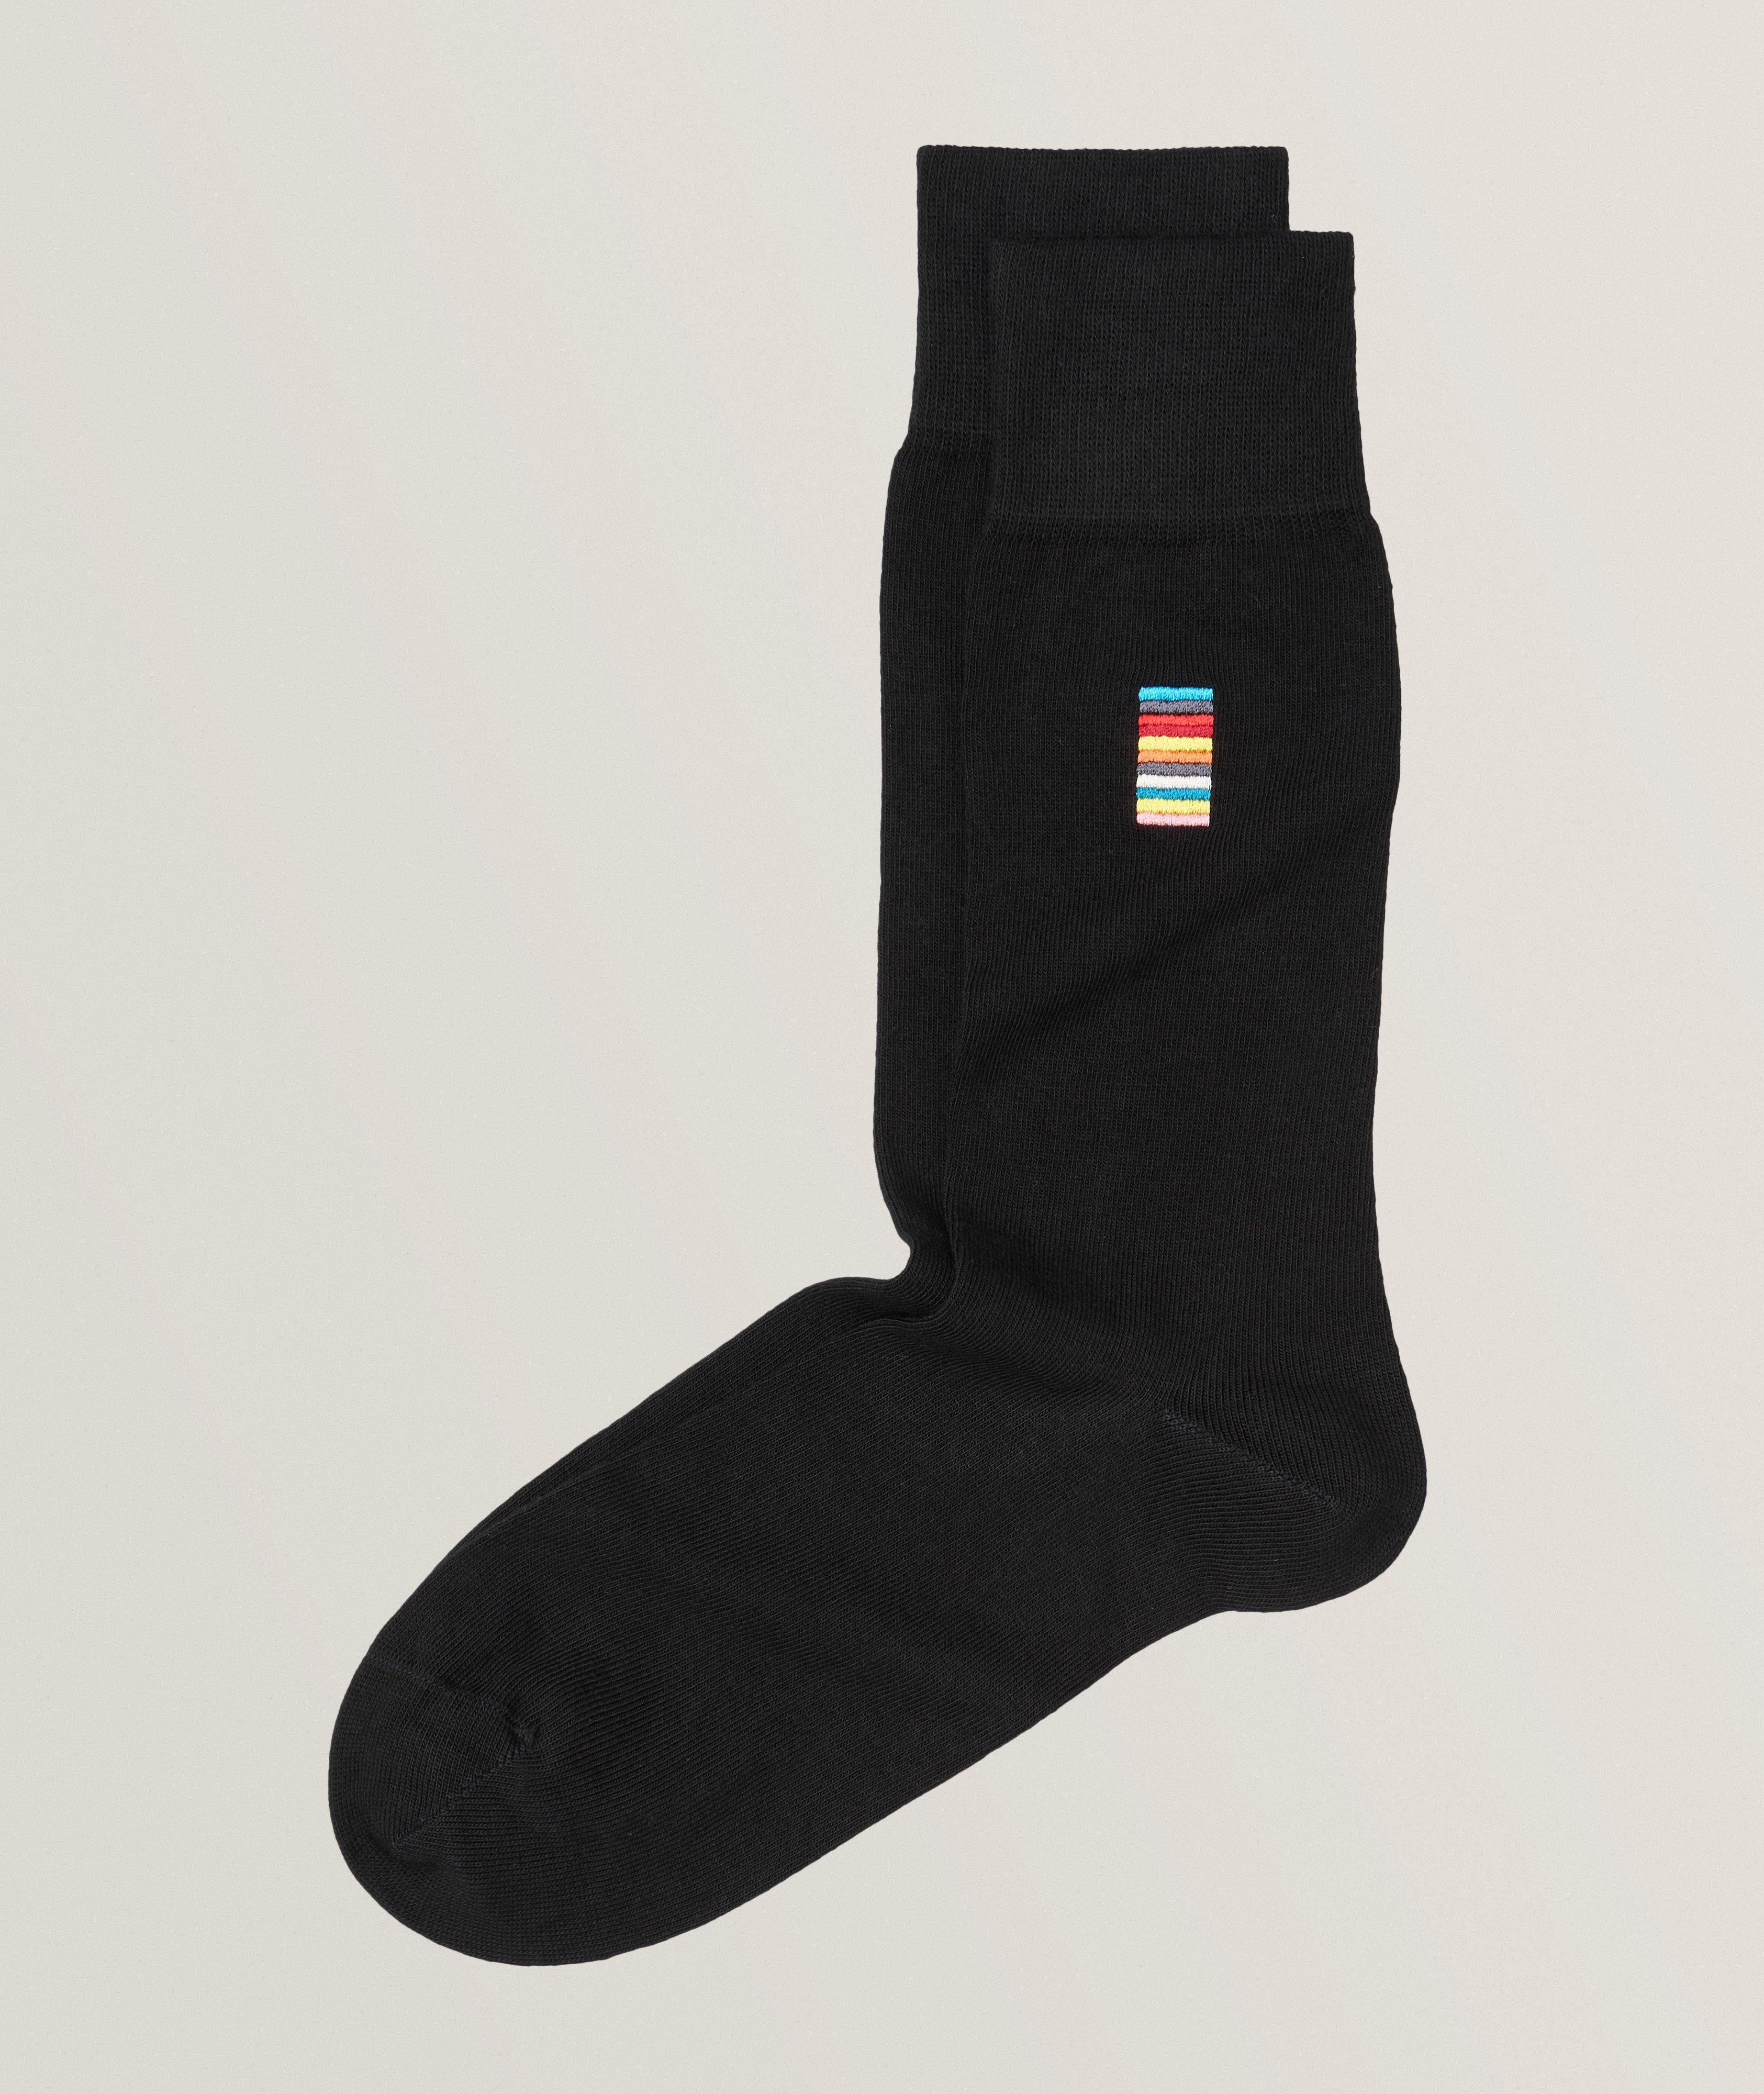 Striped Emblem Stretch-Cotton Blend Socks  image 0